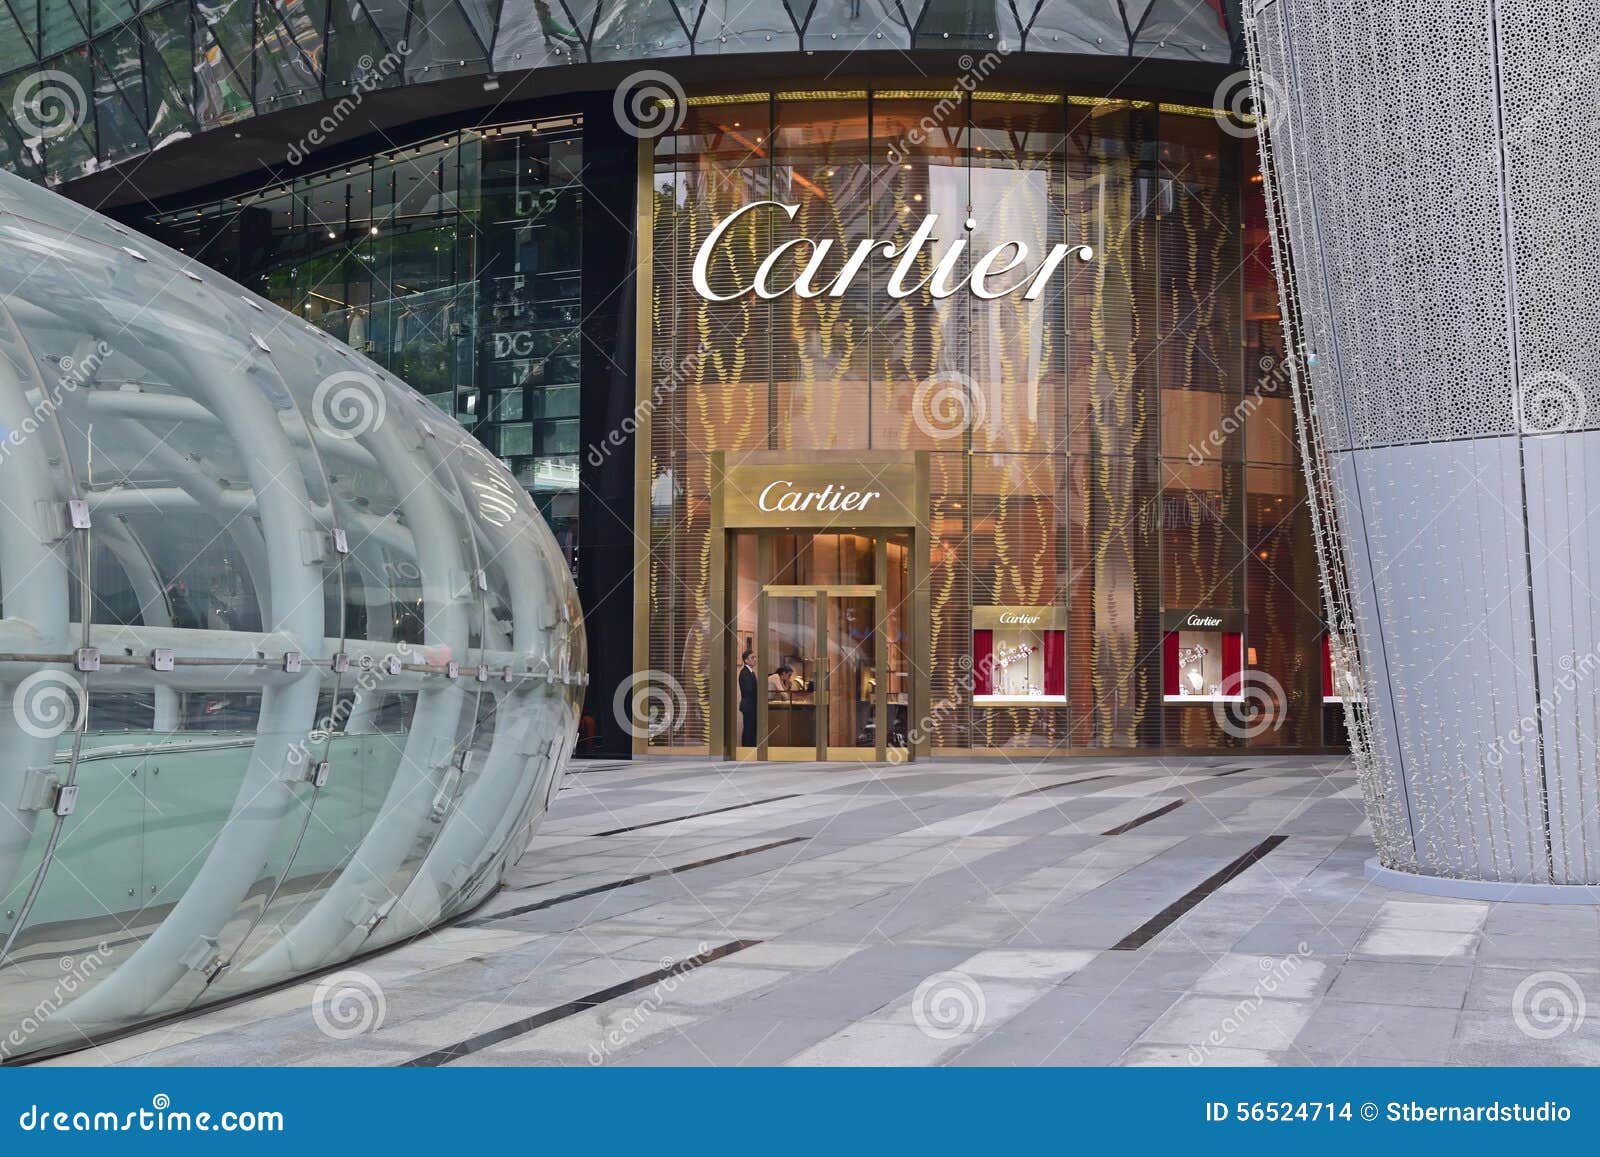 Societe Cartier Designs, Manufactures 